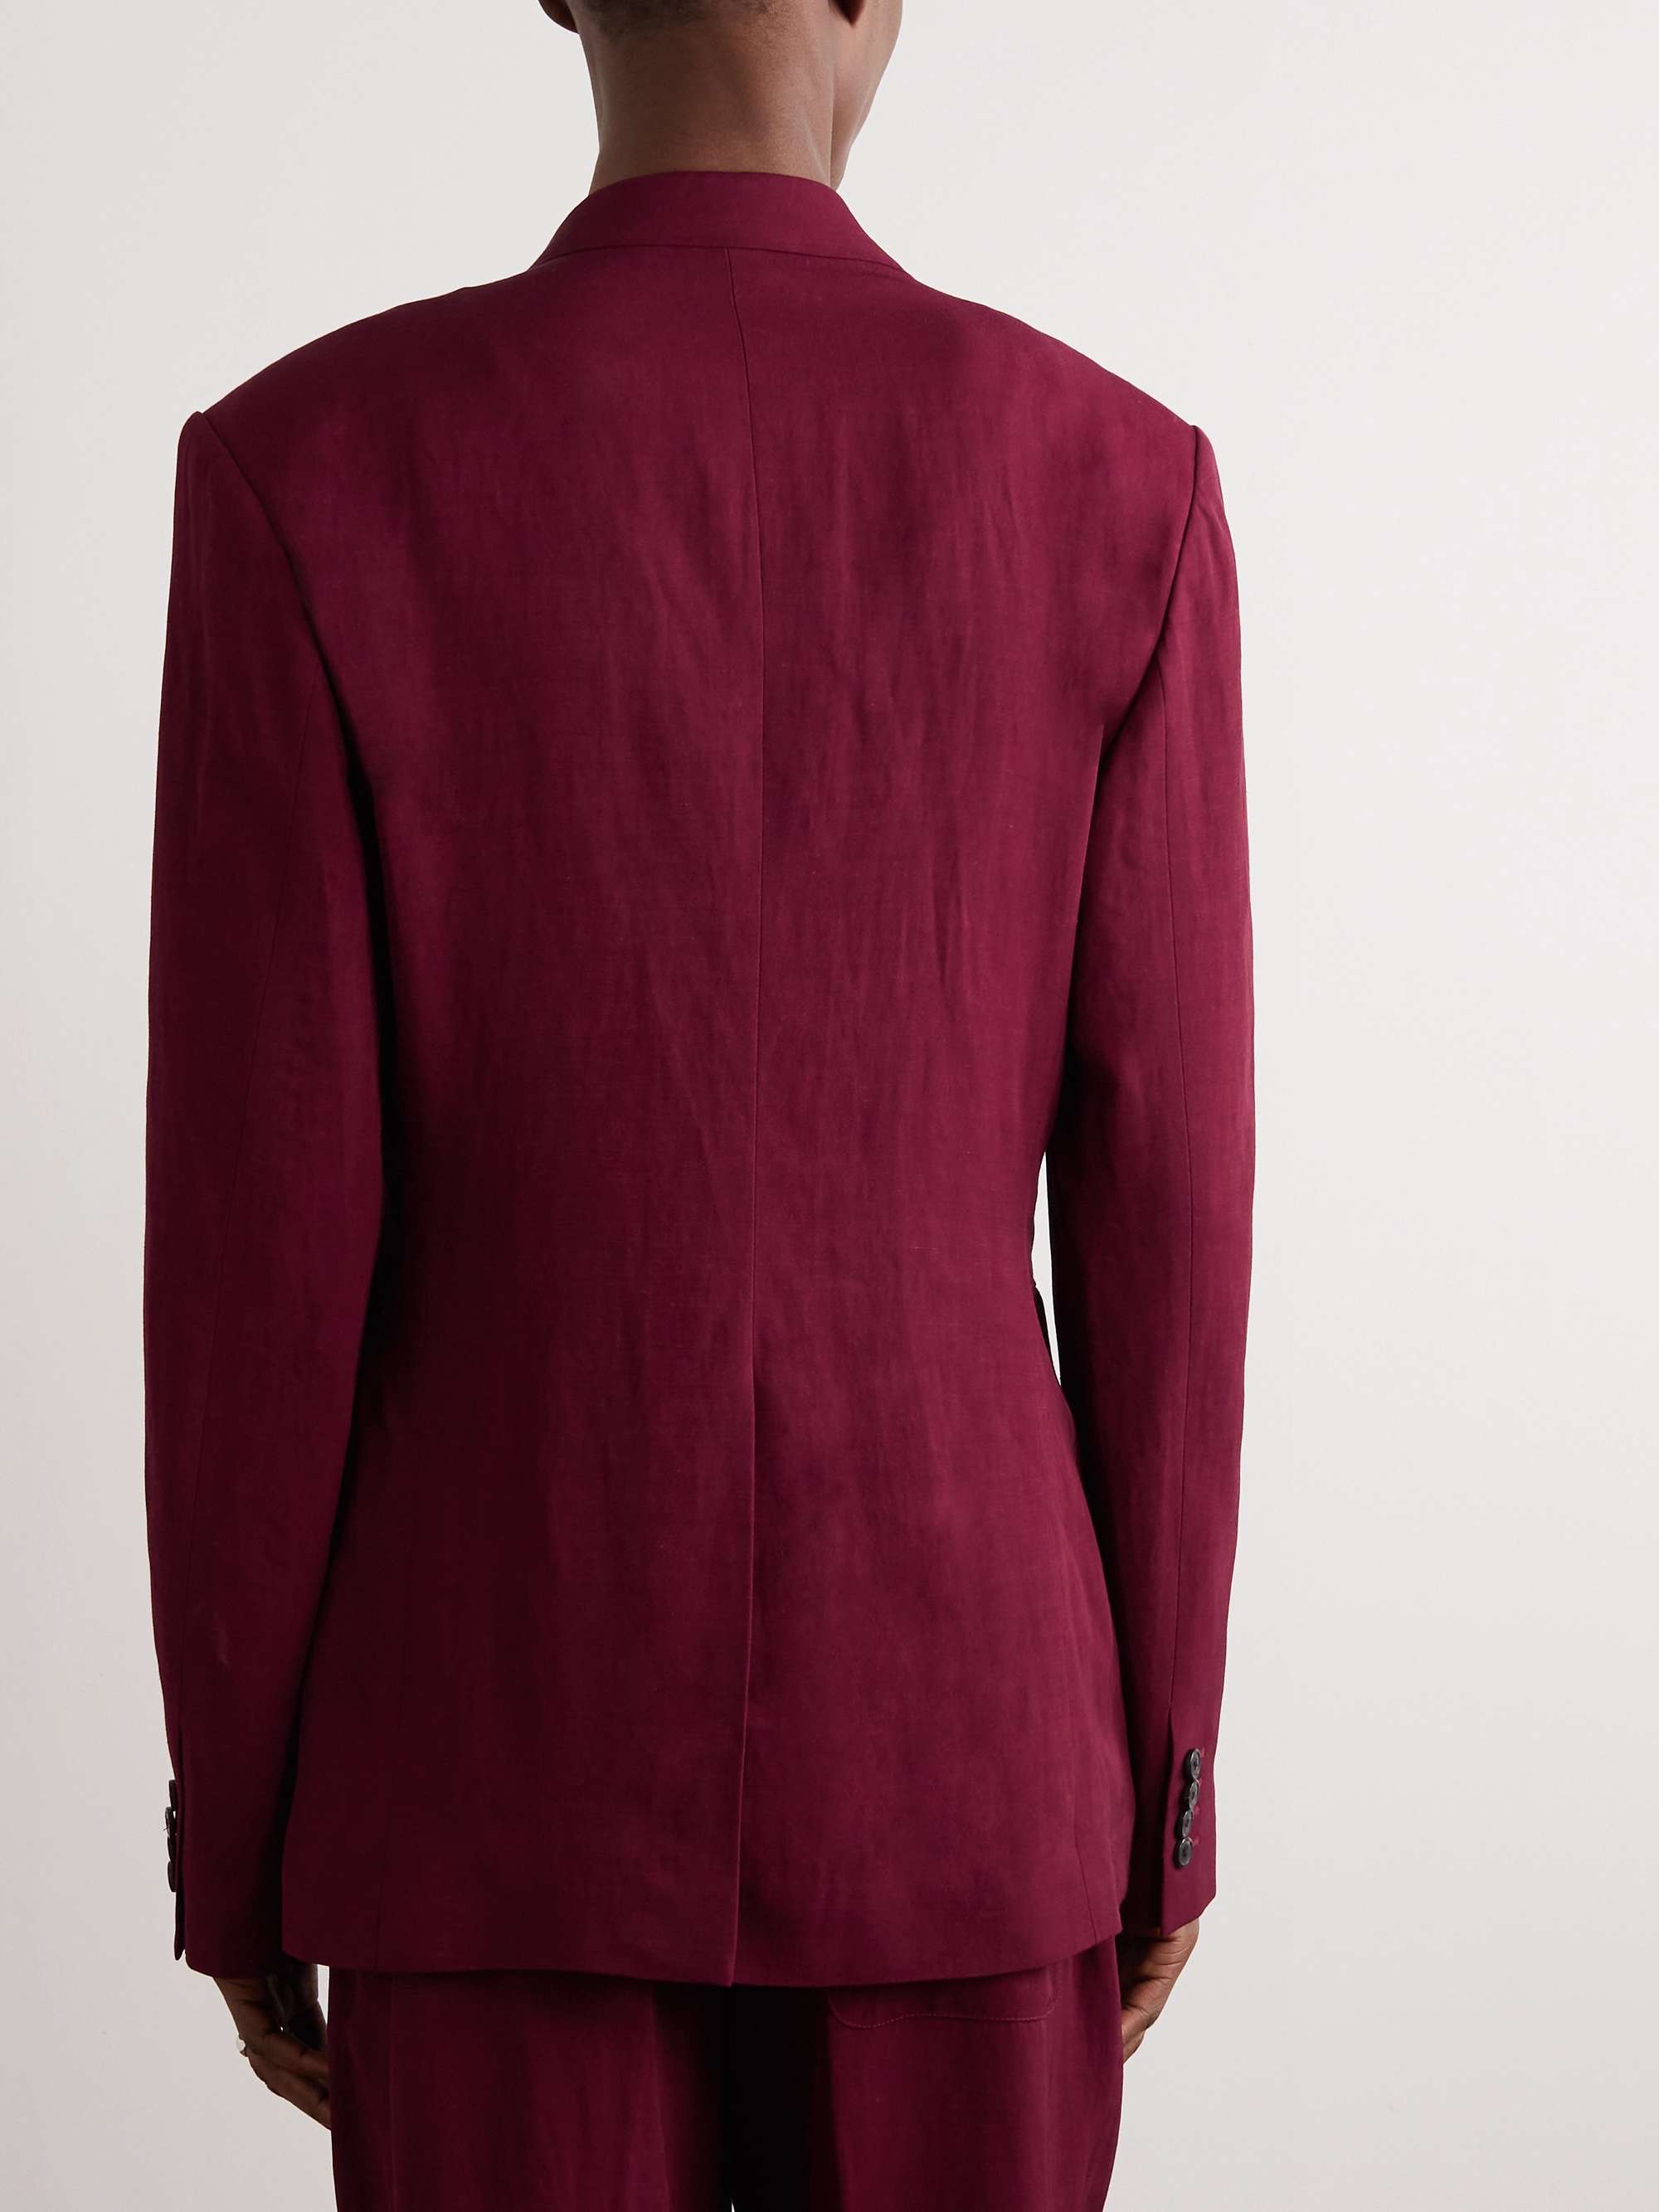 DRIES VAN NOTEN Double-Breasted Twill Suit Jacket | MR PORTER